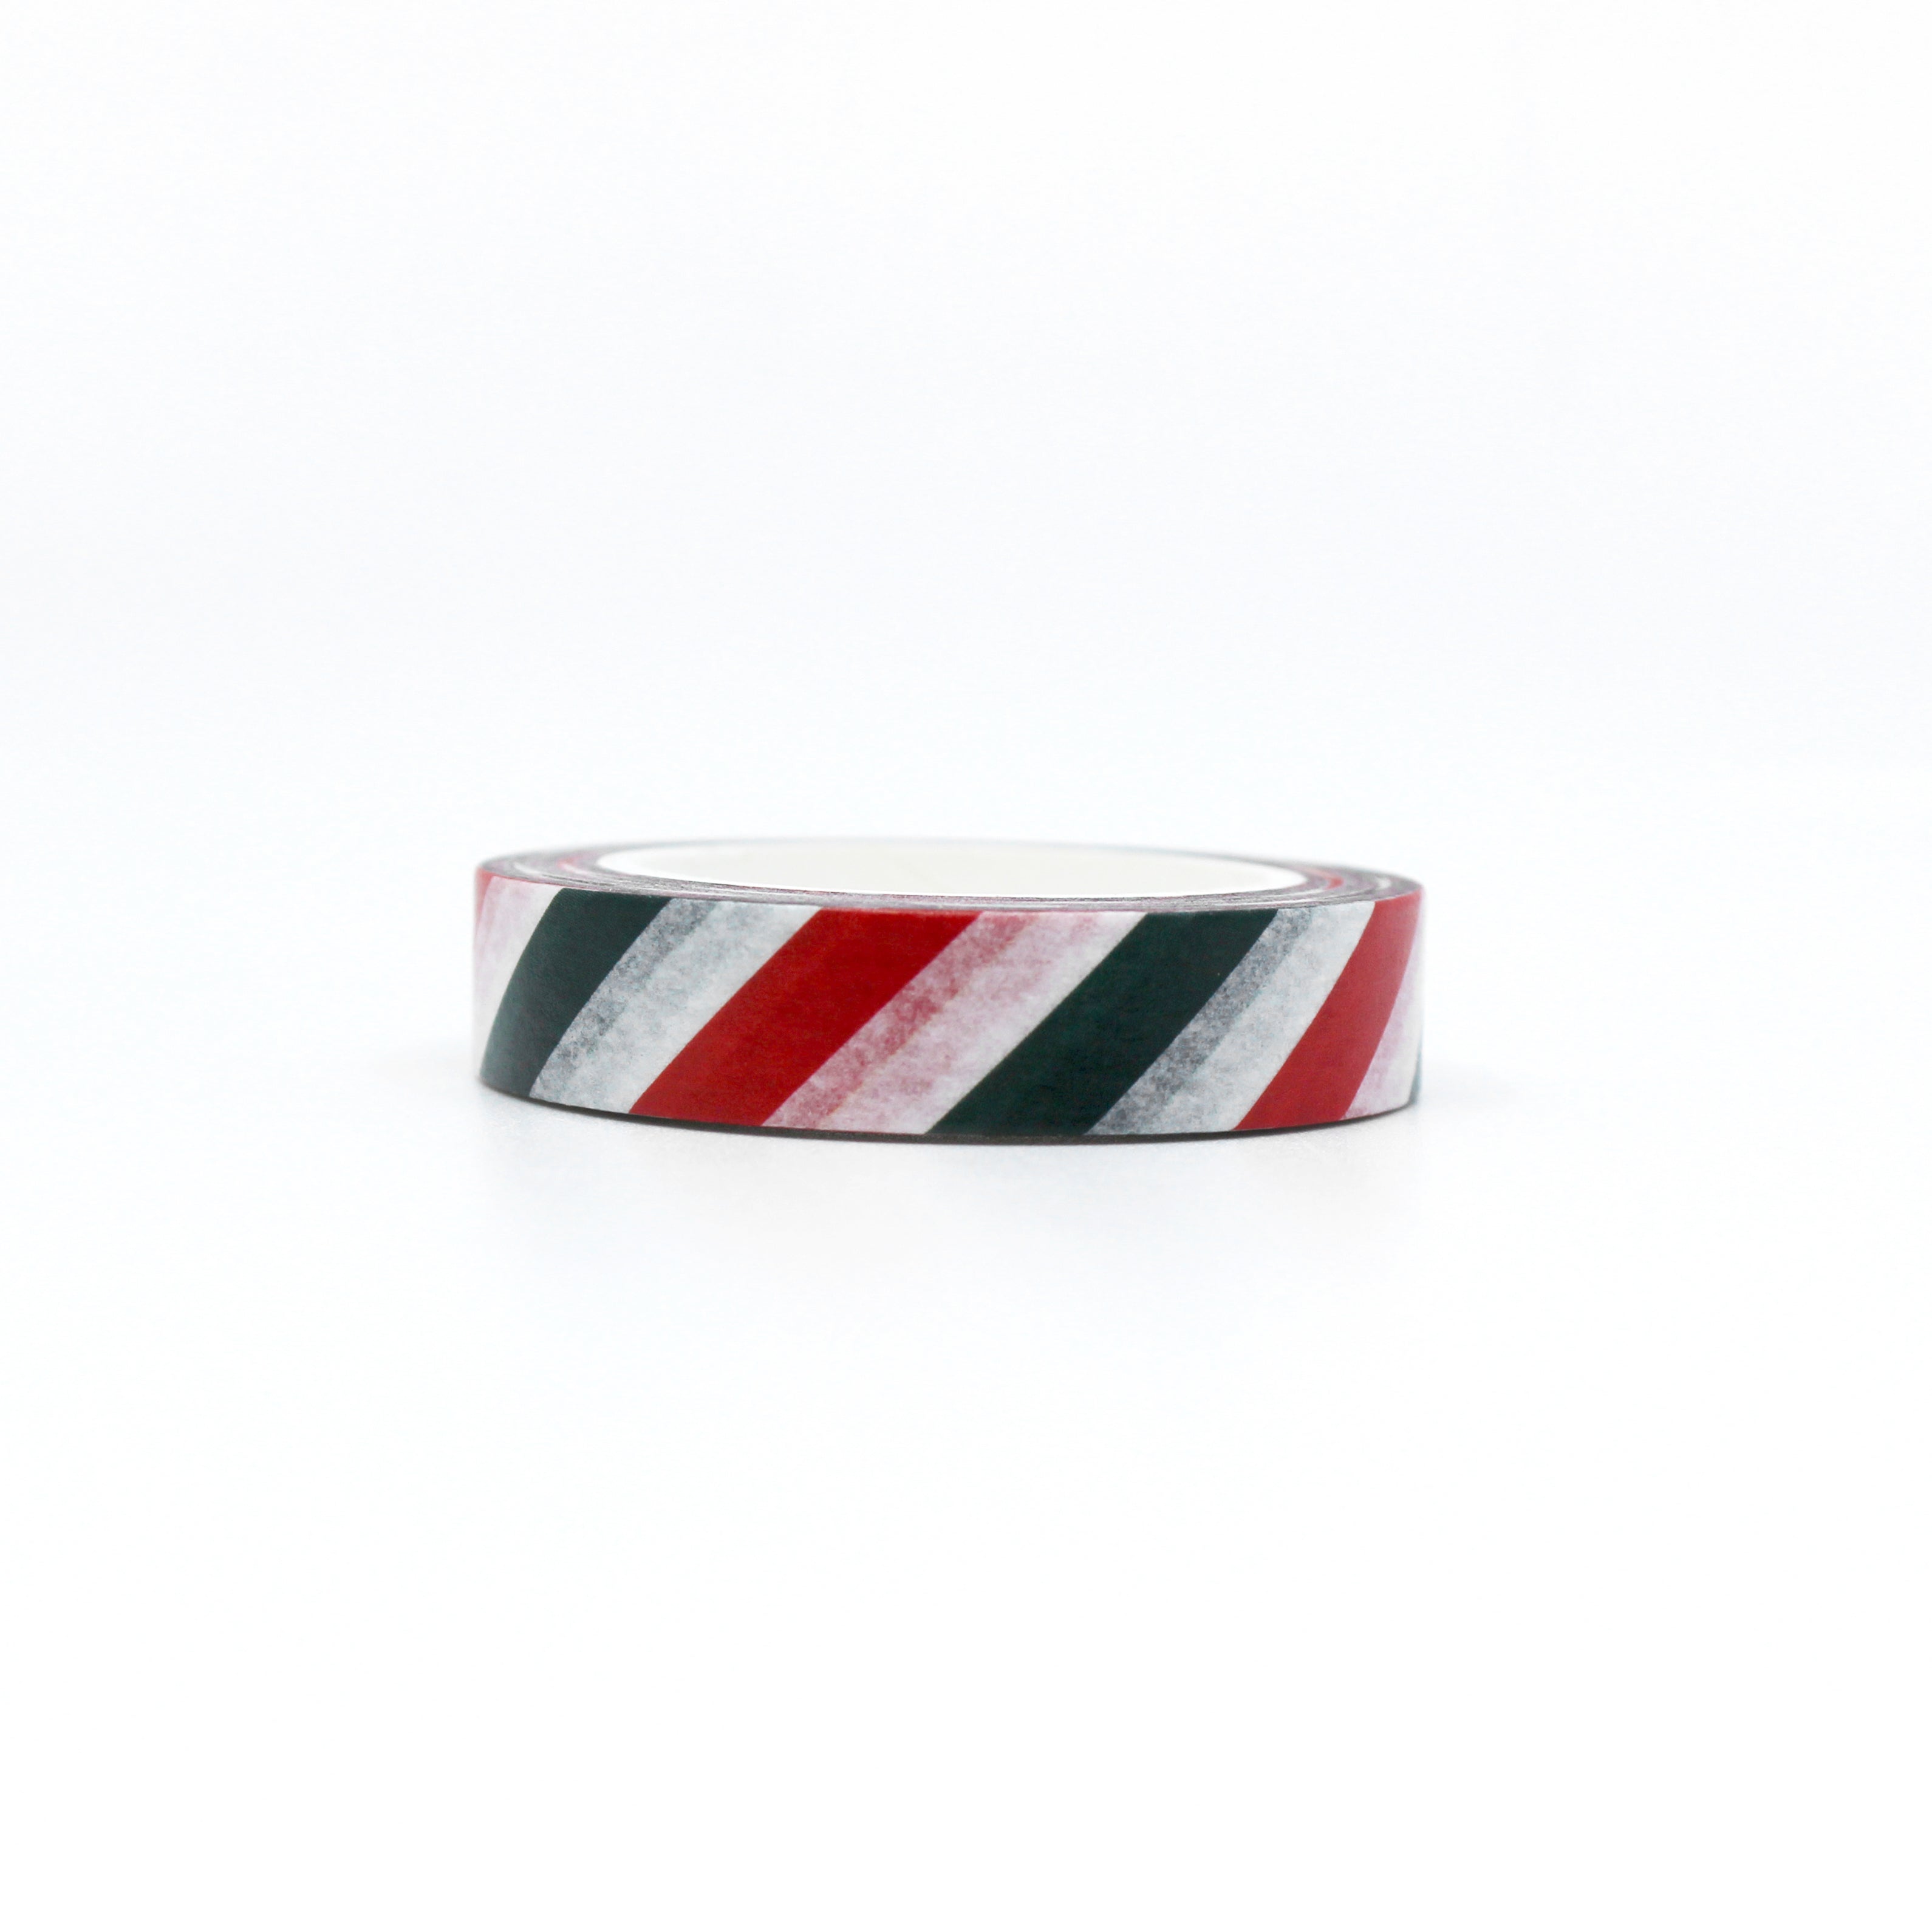 Red Foil Stripe Washi Tape, Holiday Washi Tape